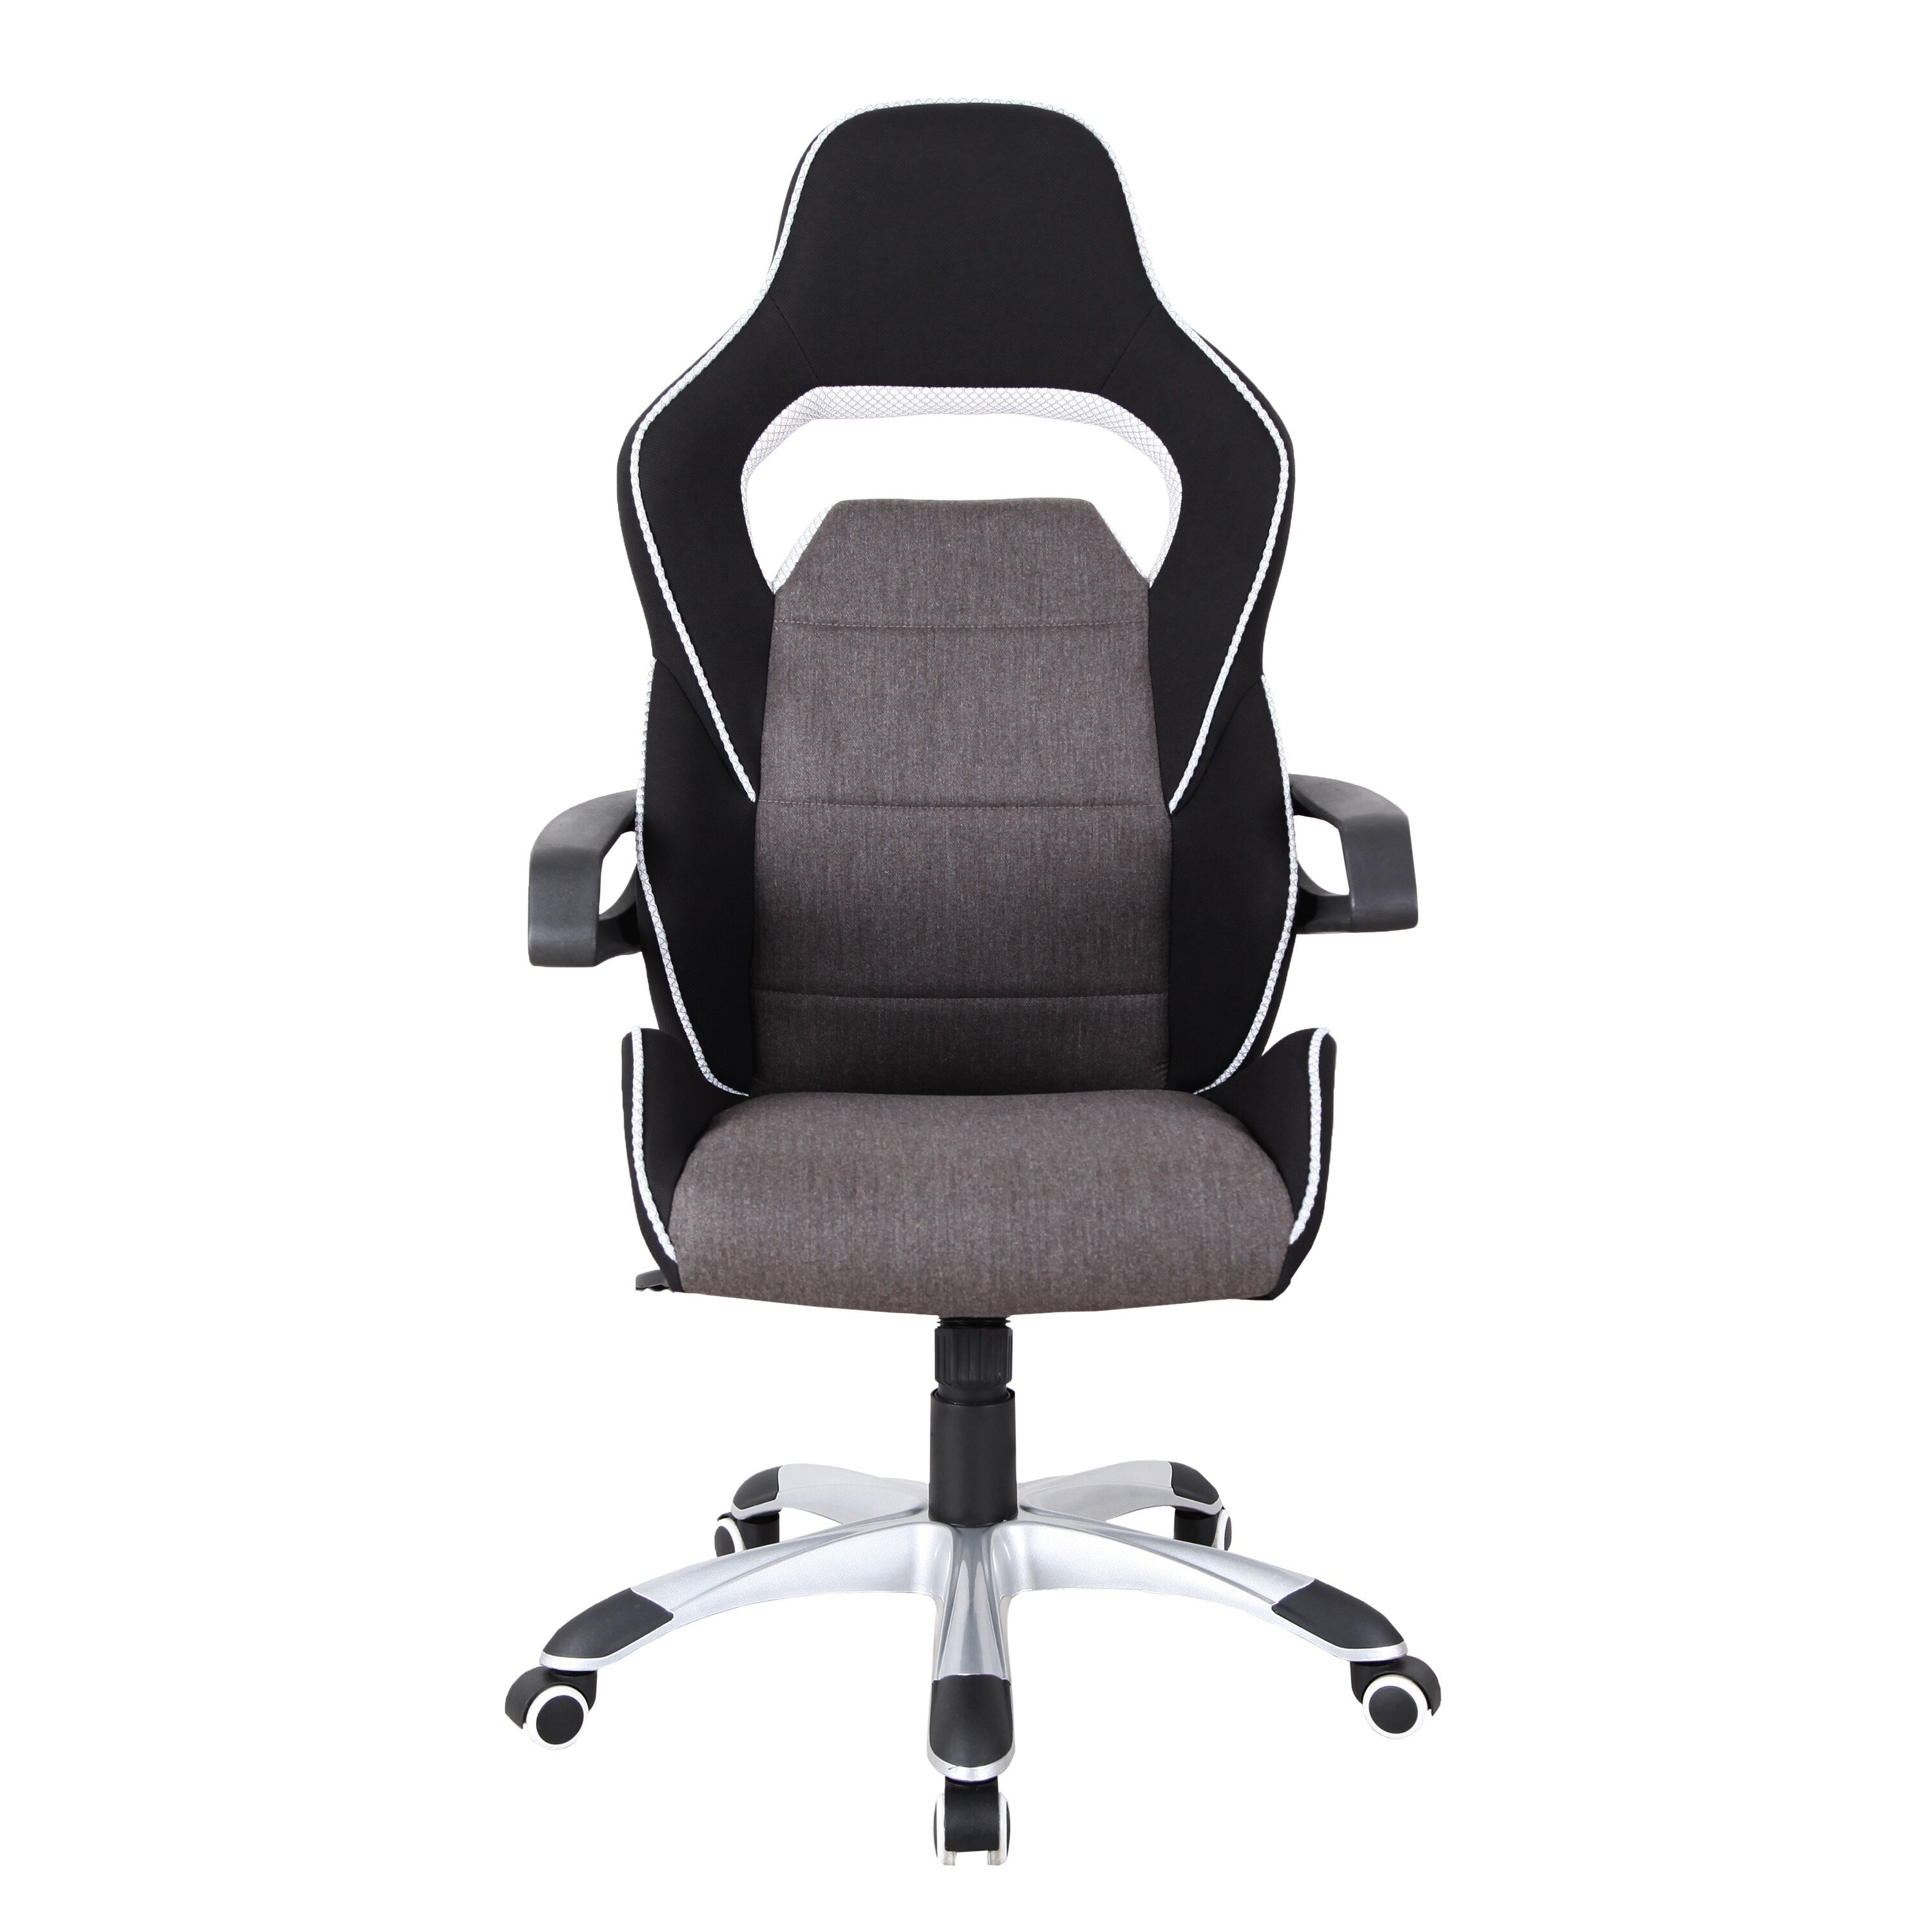 Global Pronex Mobili Ergonomic Upholstered Racing Style Home & Office Chair, Grey/Black